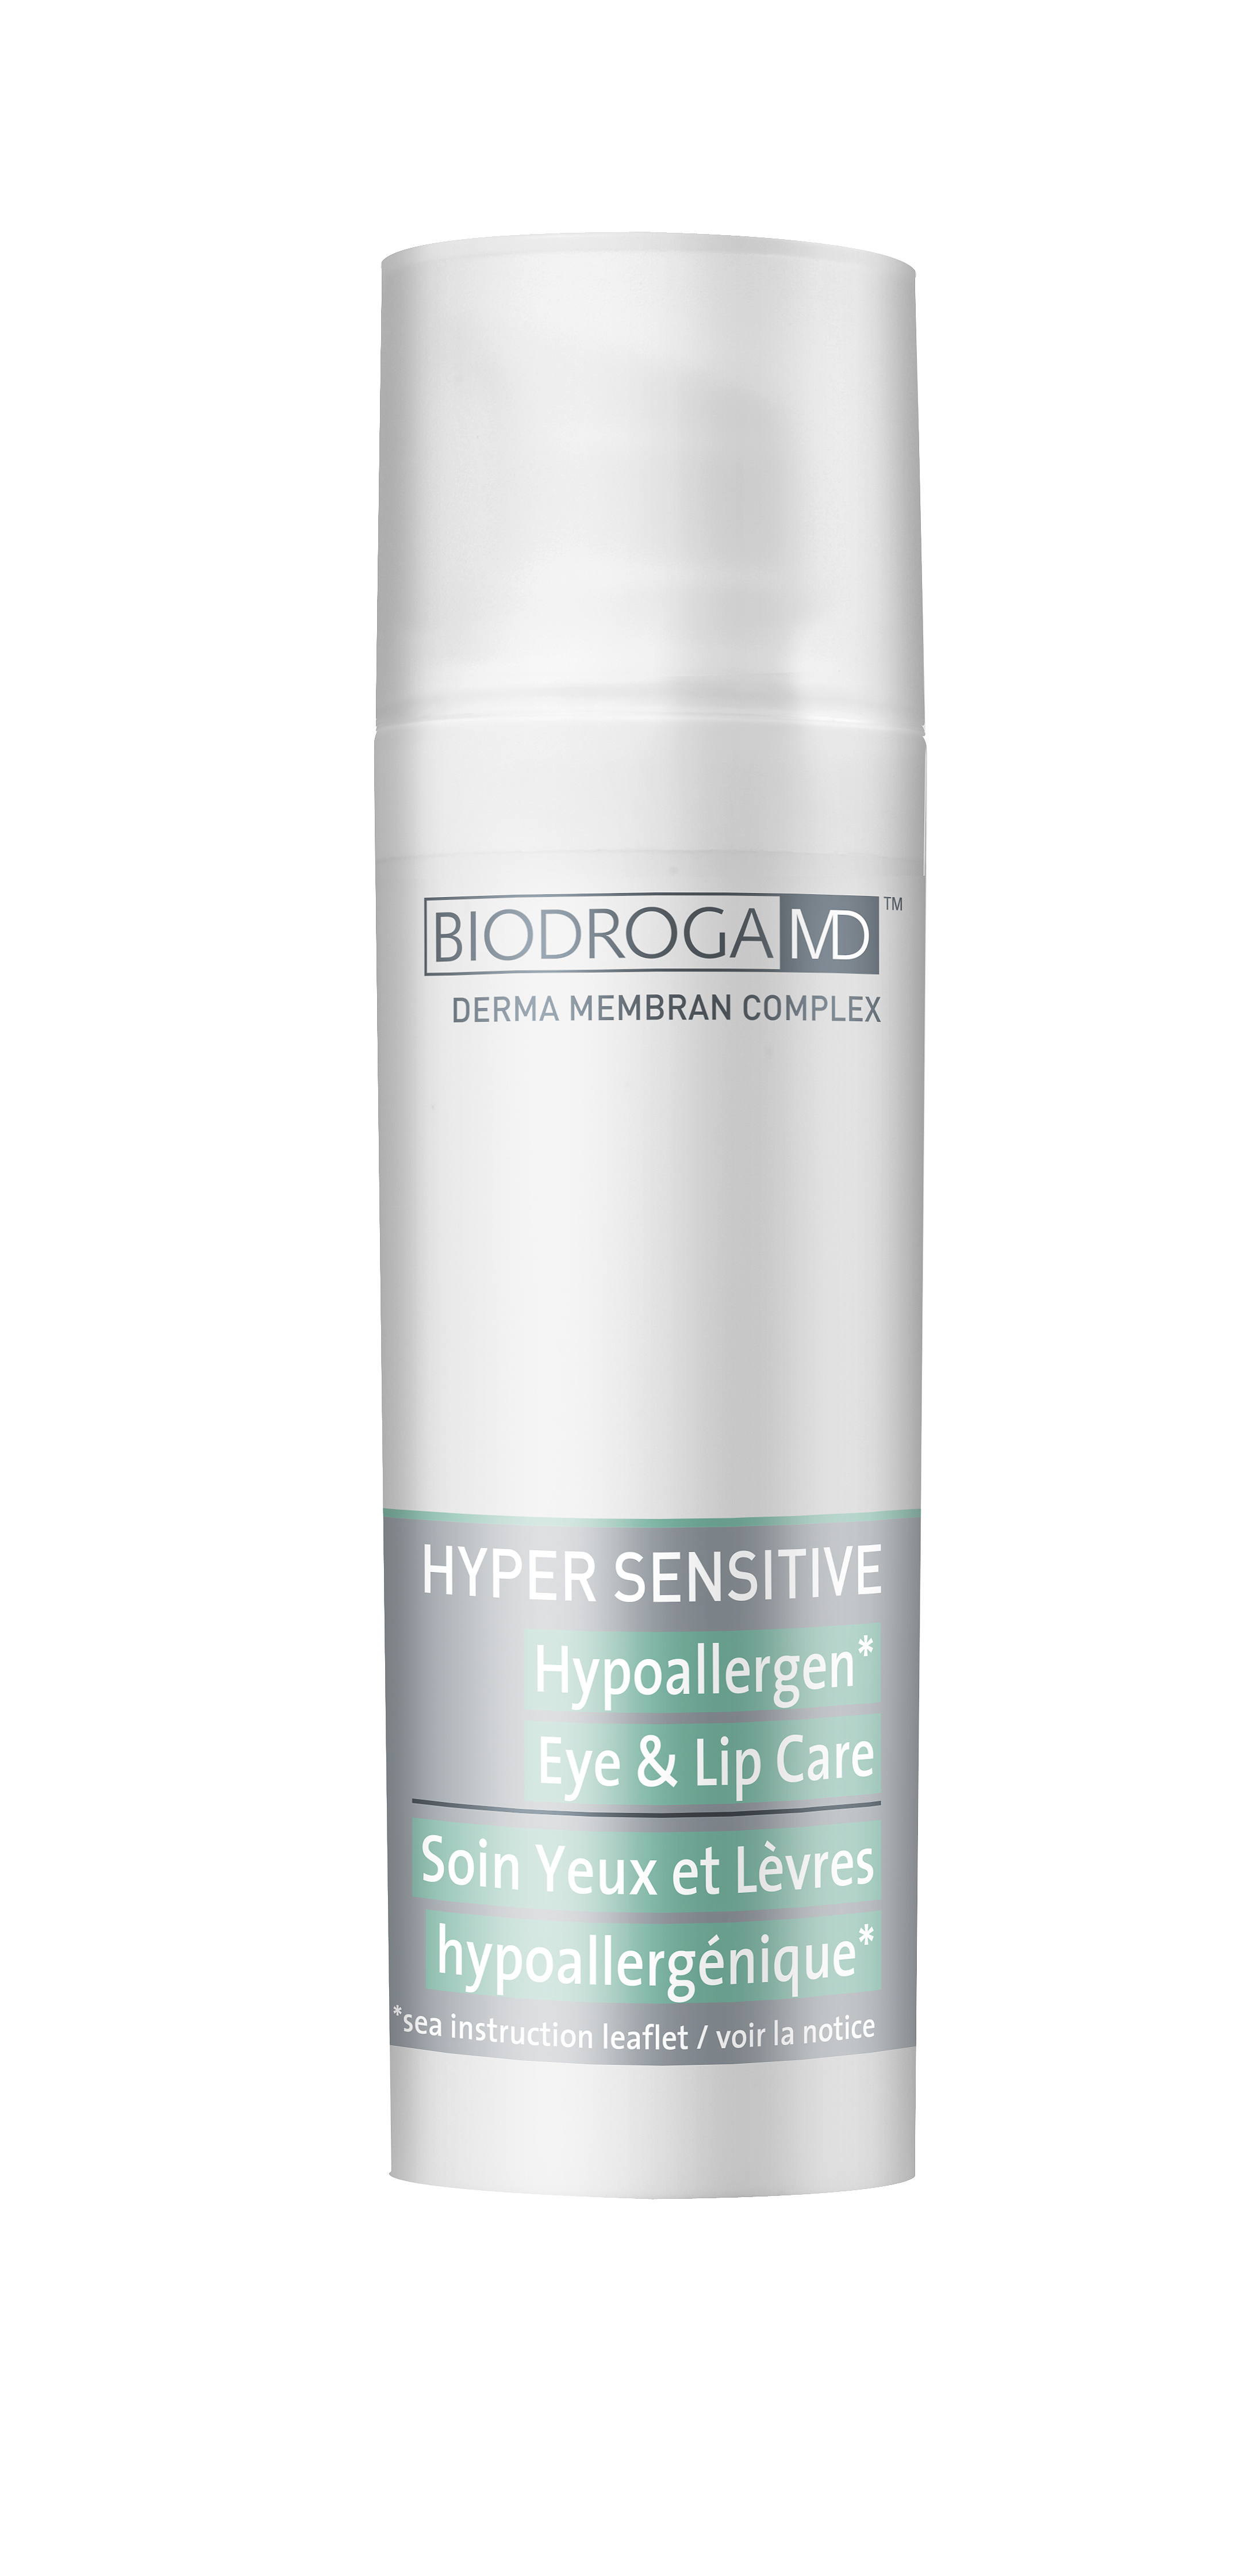 Biodroga MD Hyper-Sensitive Hypoallergen Eye & Lip Care 30 ml